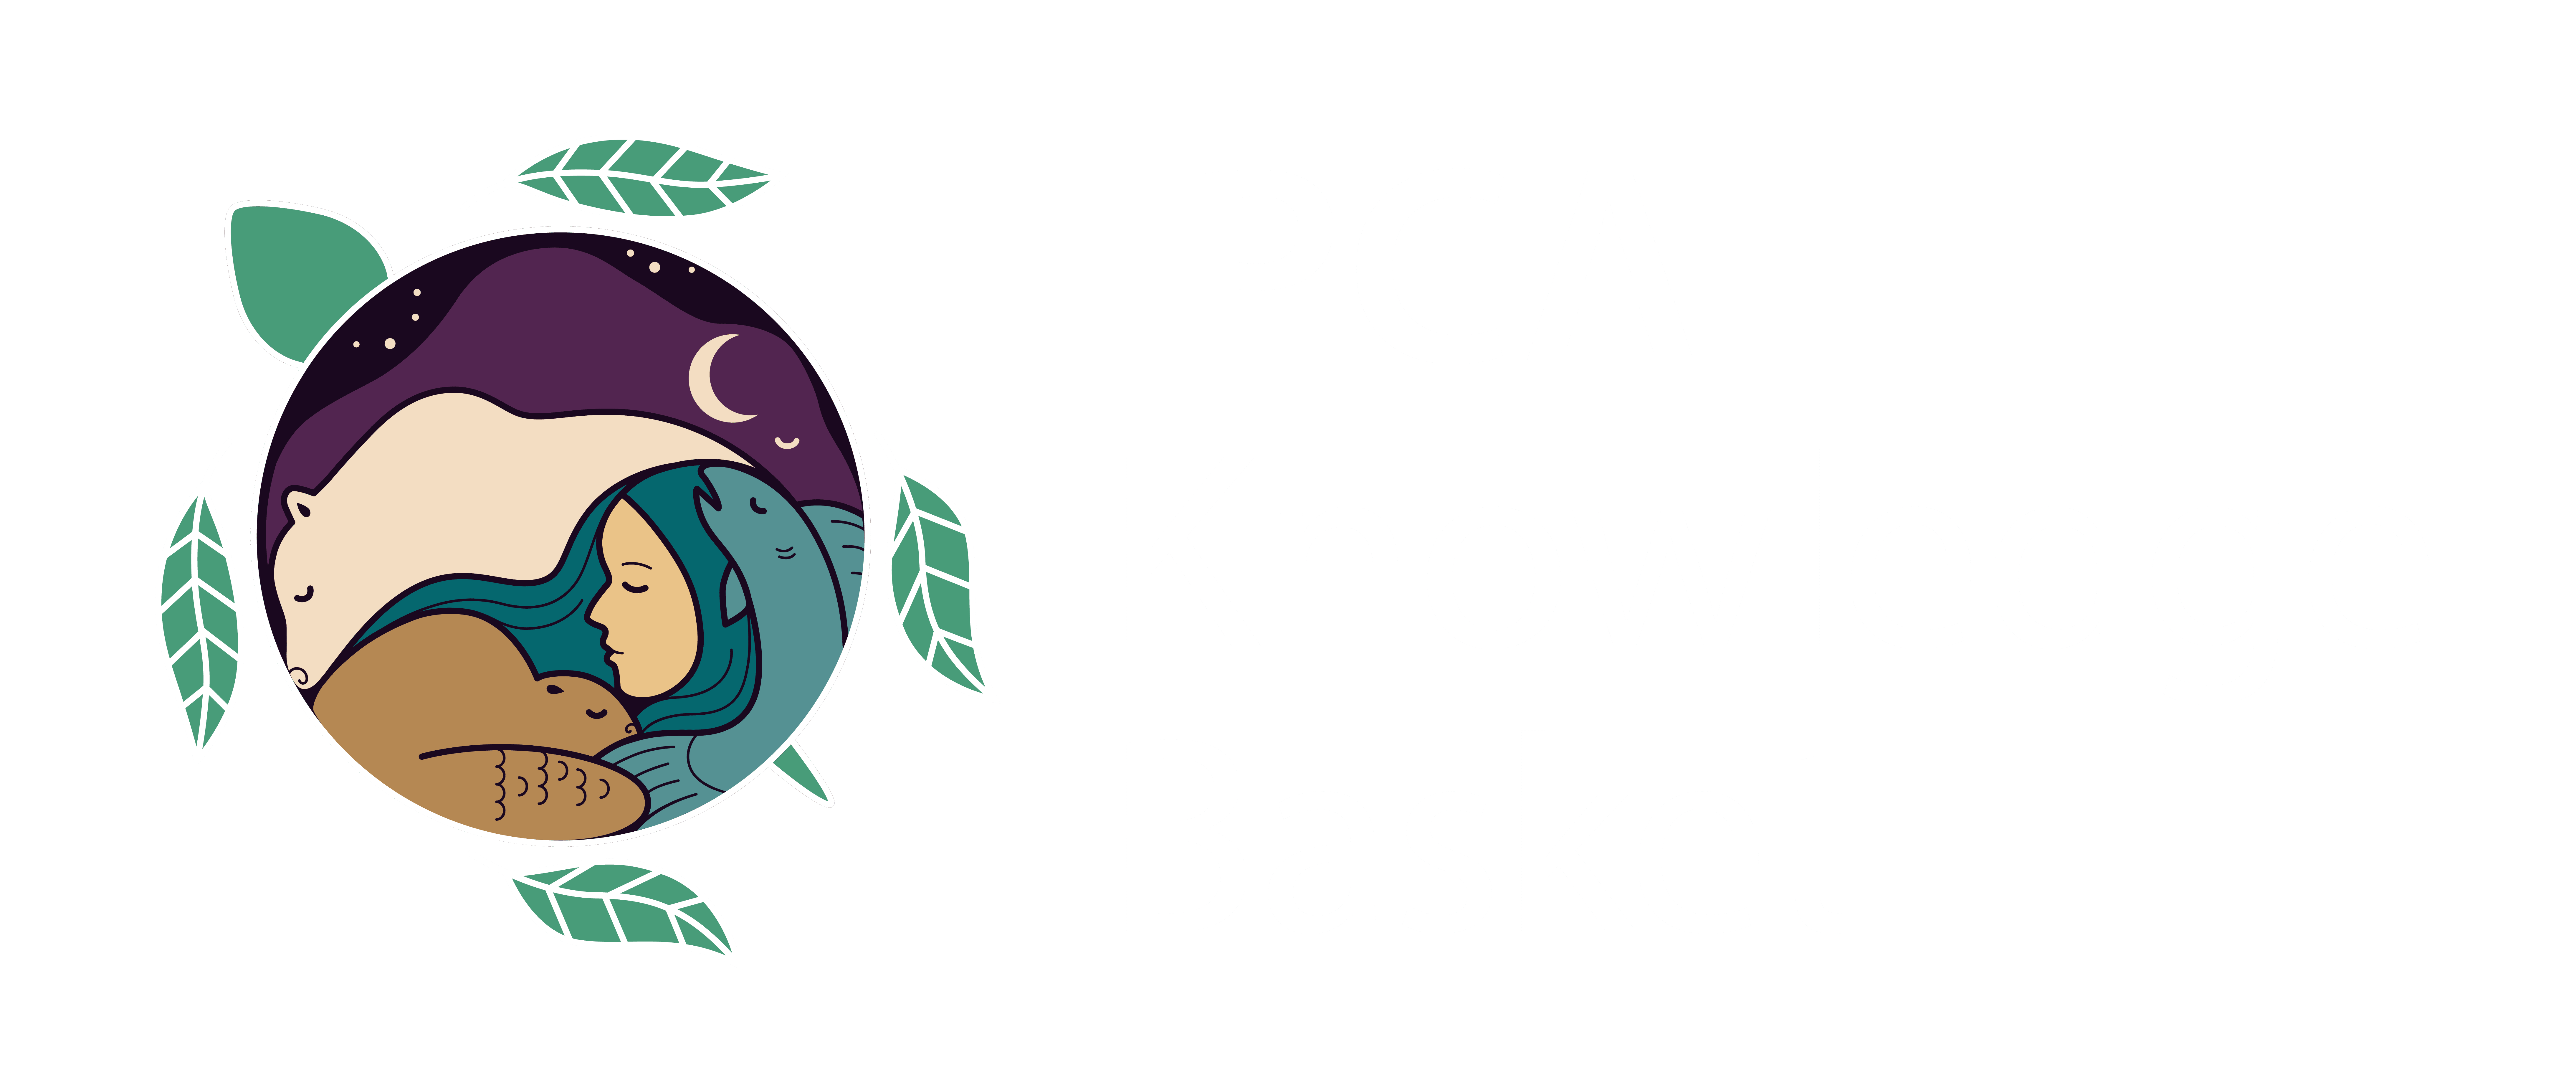 IPCA Knowledge Basket Logo